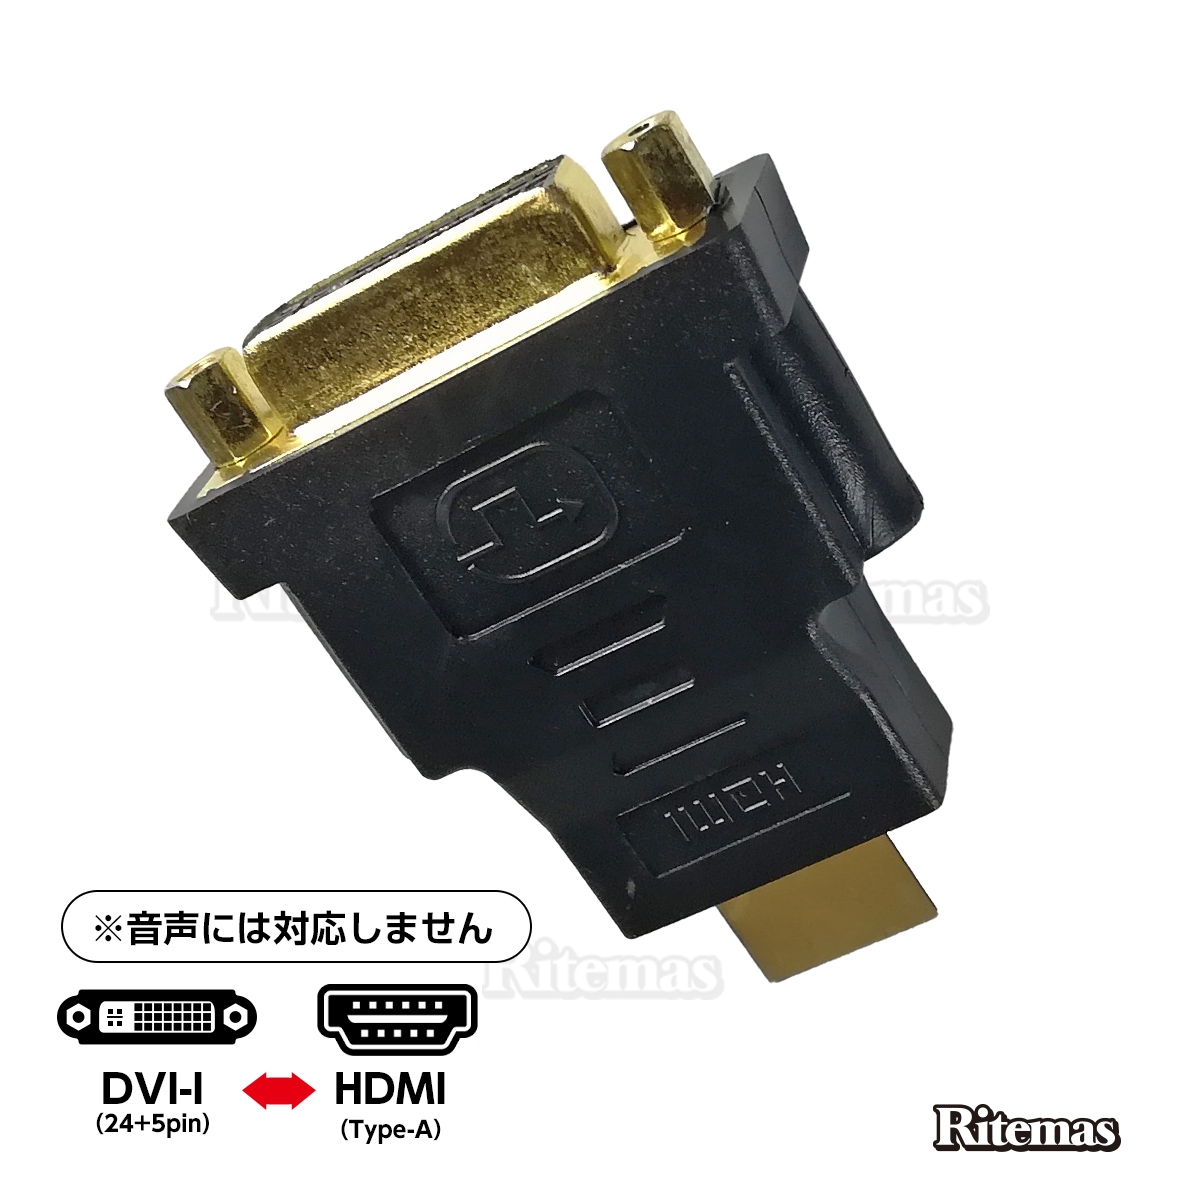 HDMI DVI 変換アダプター 変換コネクタ 変換 HDMIオス 24+5ピン 税込 29ピン メス DVI凹 2022 新作 HDMI凸 DVI-I 29pin 変換アダプタ デュアル アナログ デジタル 24+5pin Dual Link HDMI端子 デュアルリング モニターケーブル変換接続 ディスプレイ変換